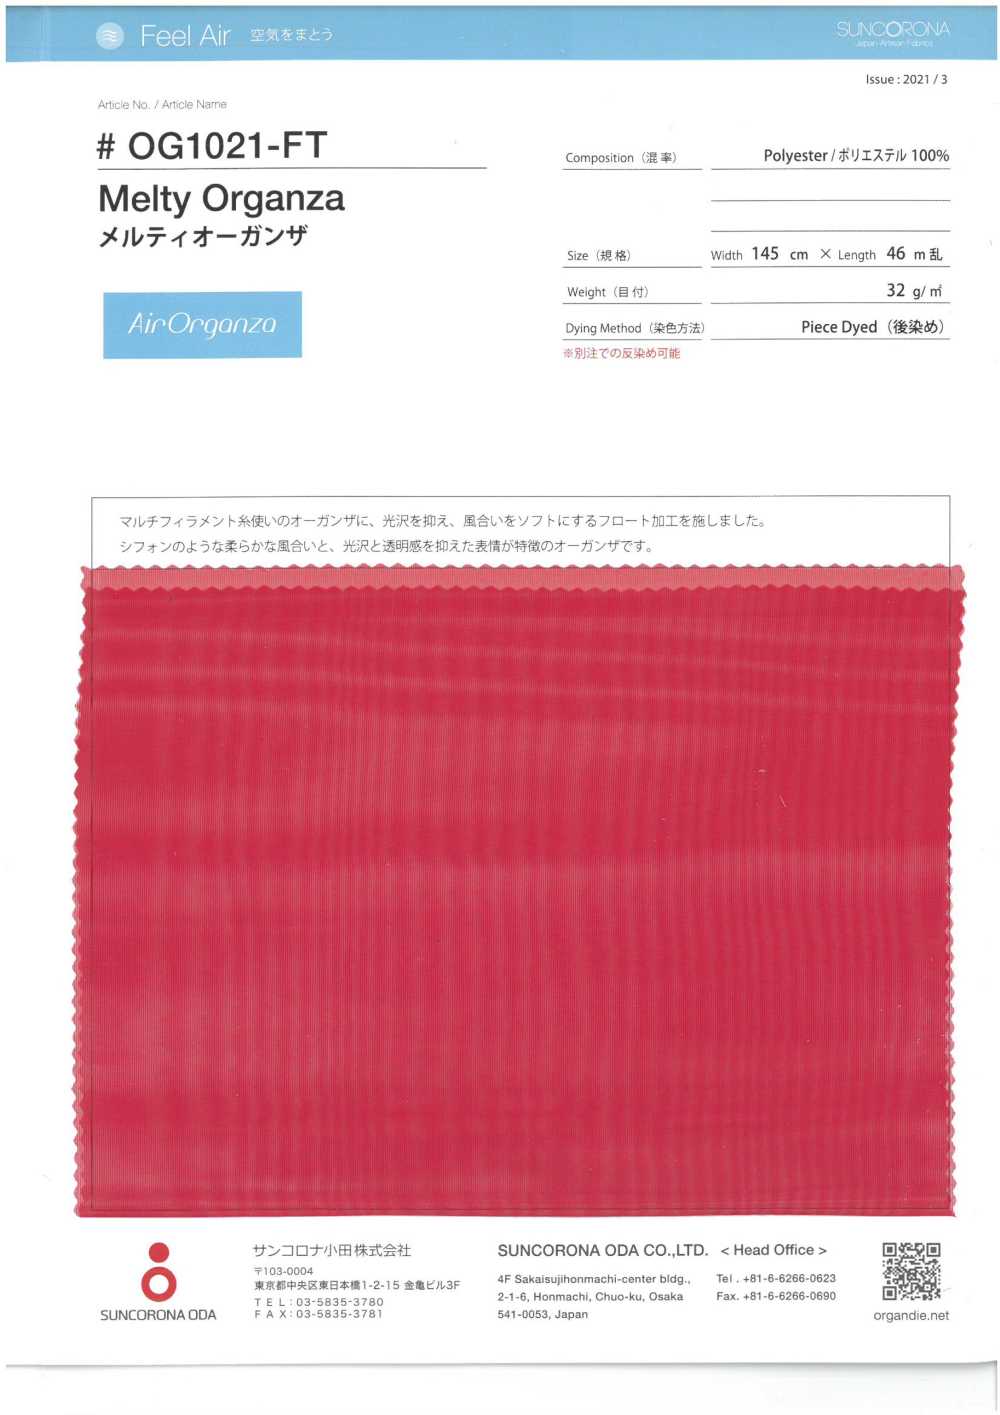 OG1021-FT Melty Organza[Fabrication De Textile] Suncorona Oda